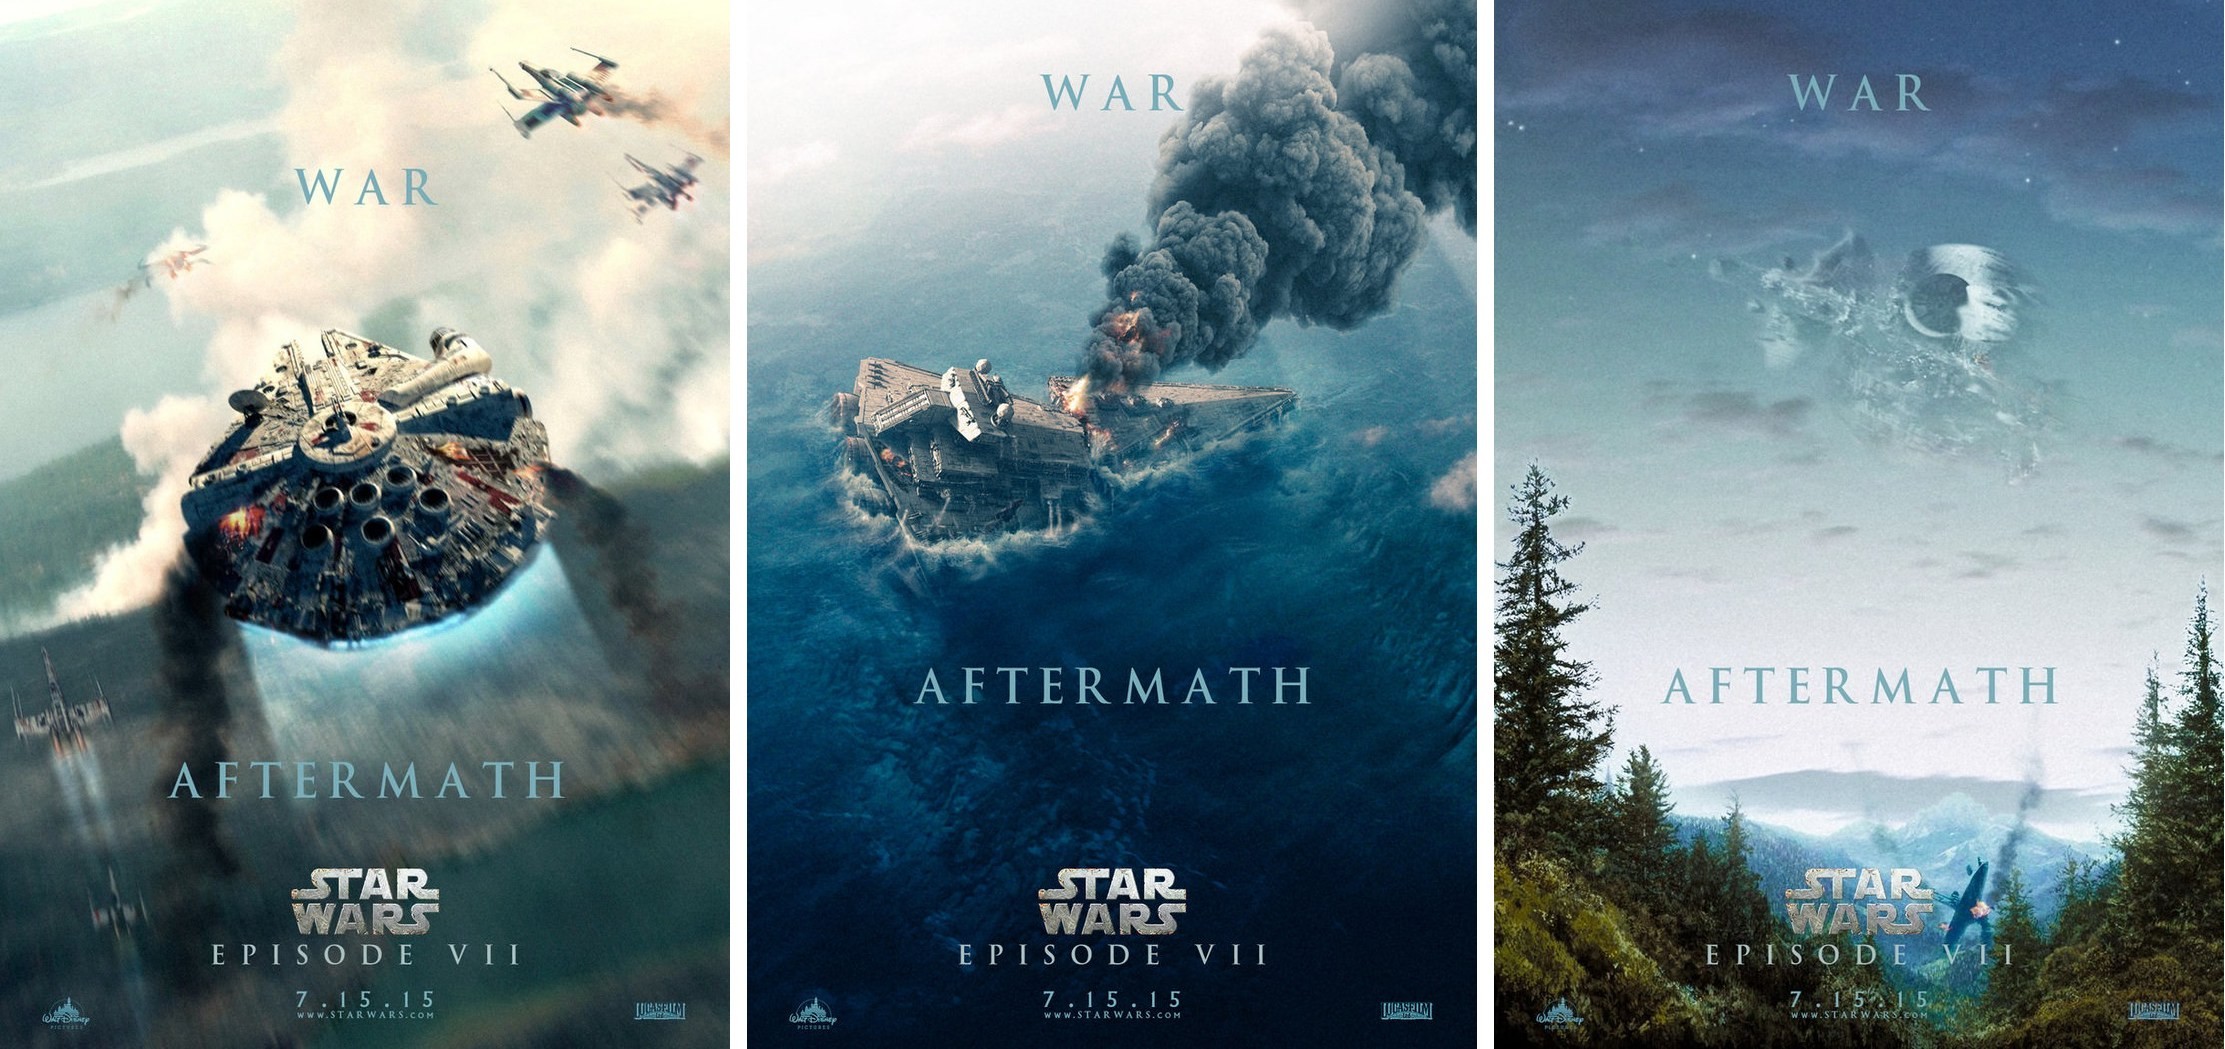 Star Wars, Star Wars: Episode VII   The Force Awakens Wallpaper